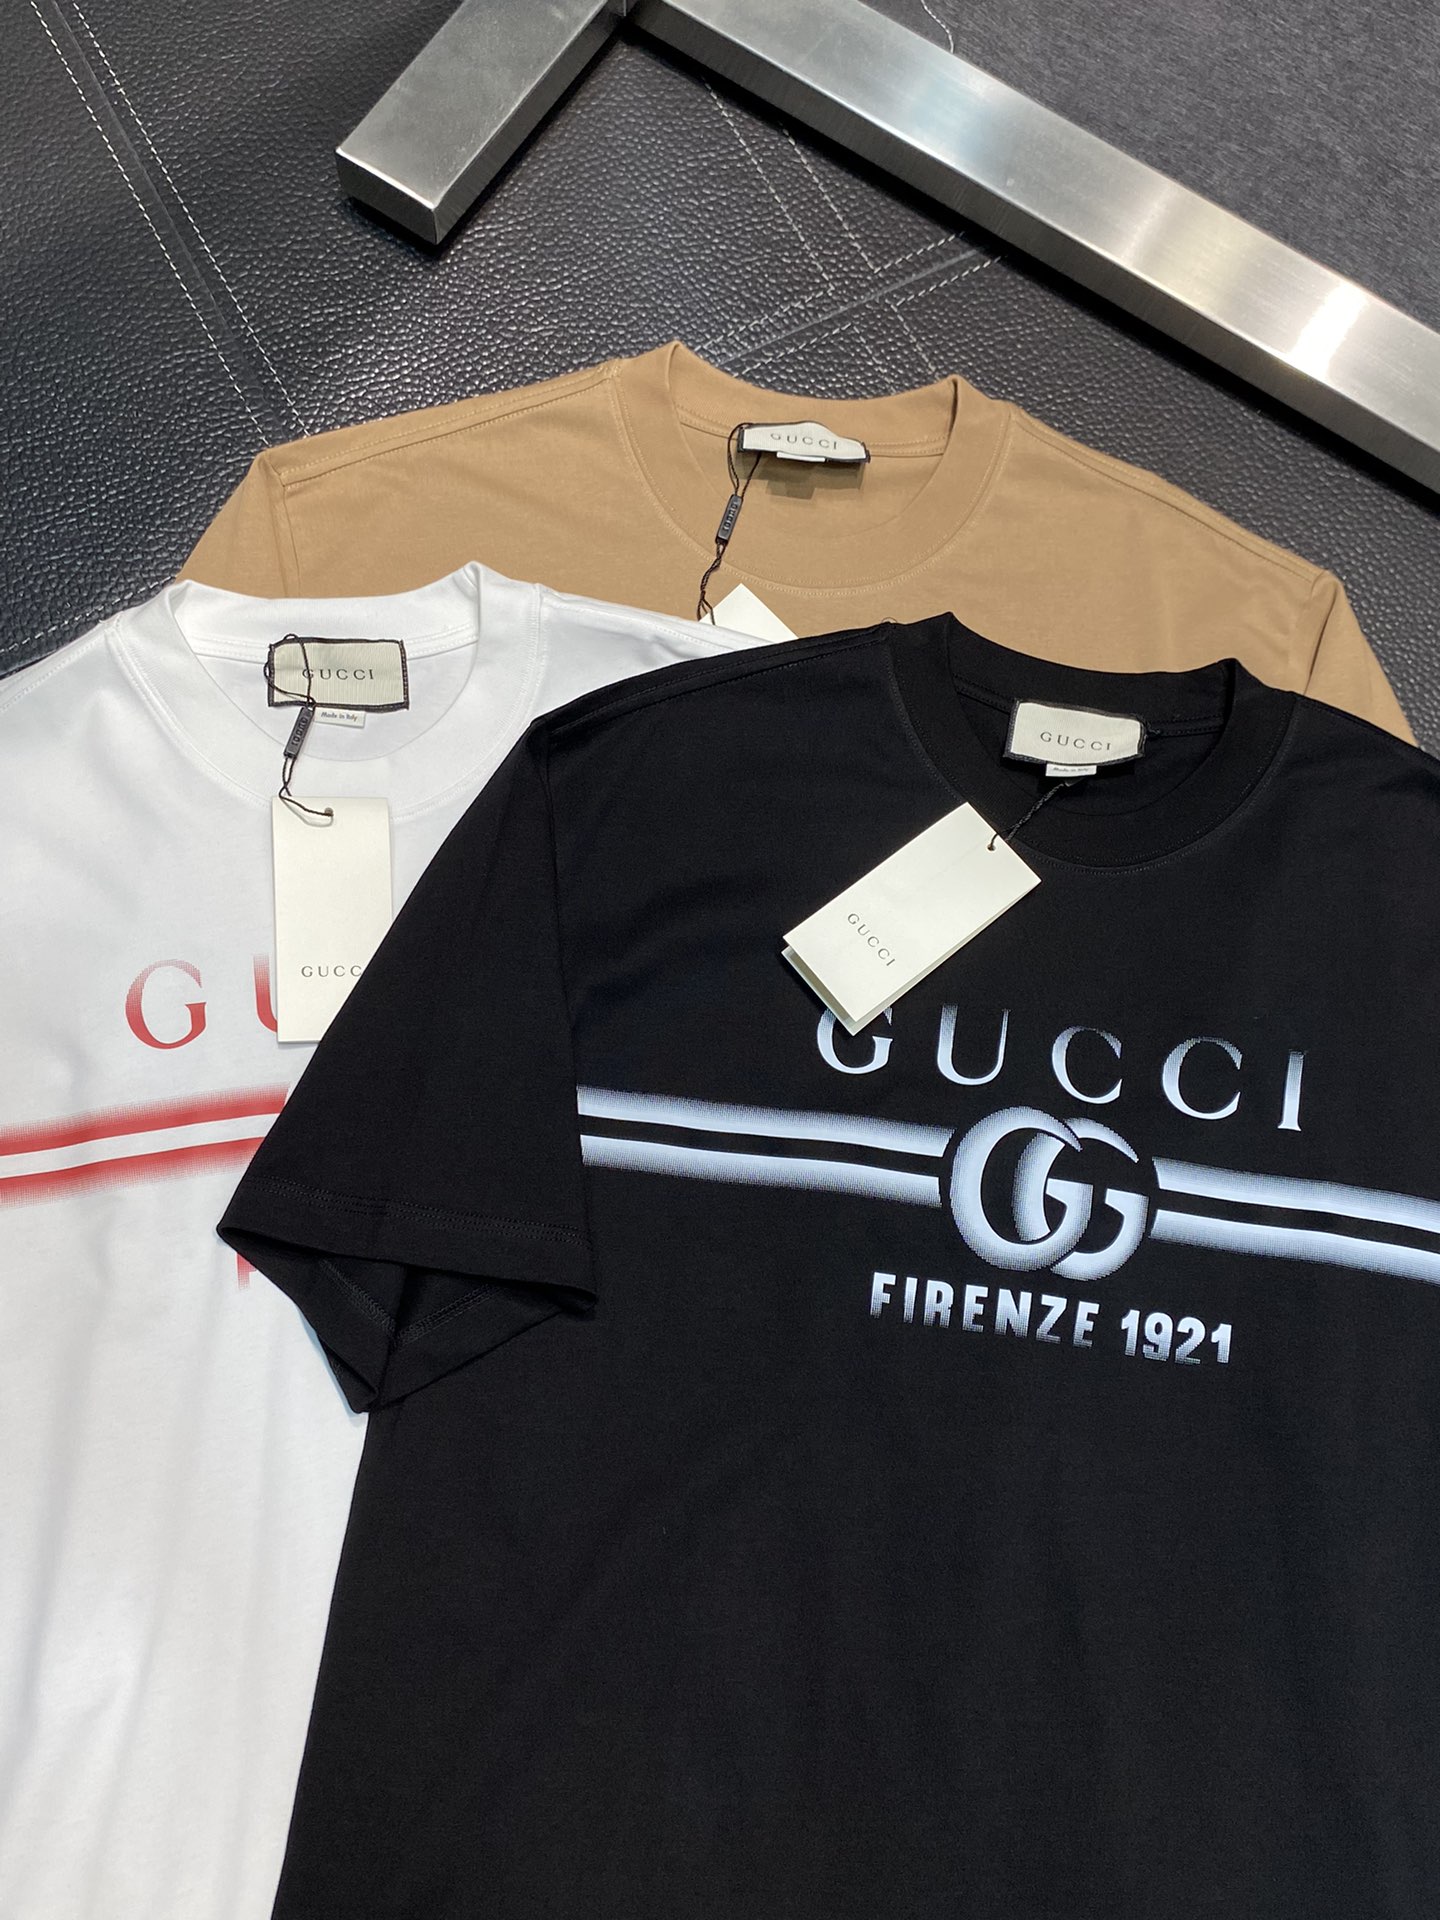 Gucci Clothing T-Shirt Men Fashion Short Sleeve